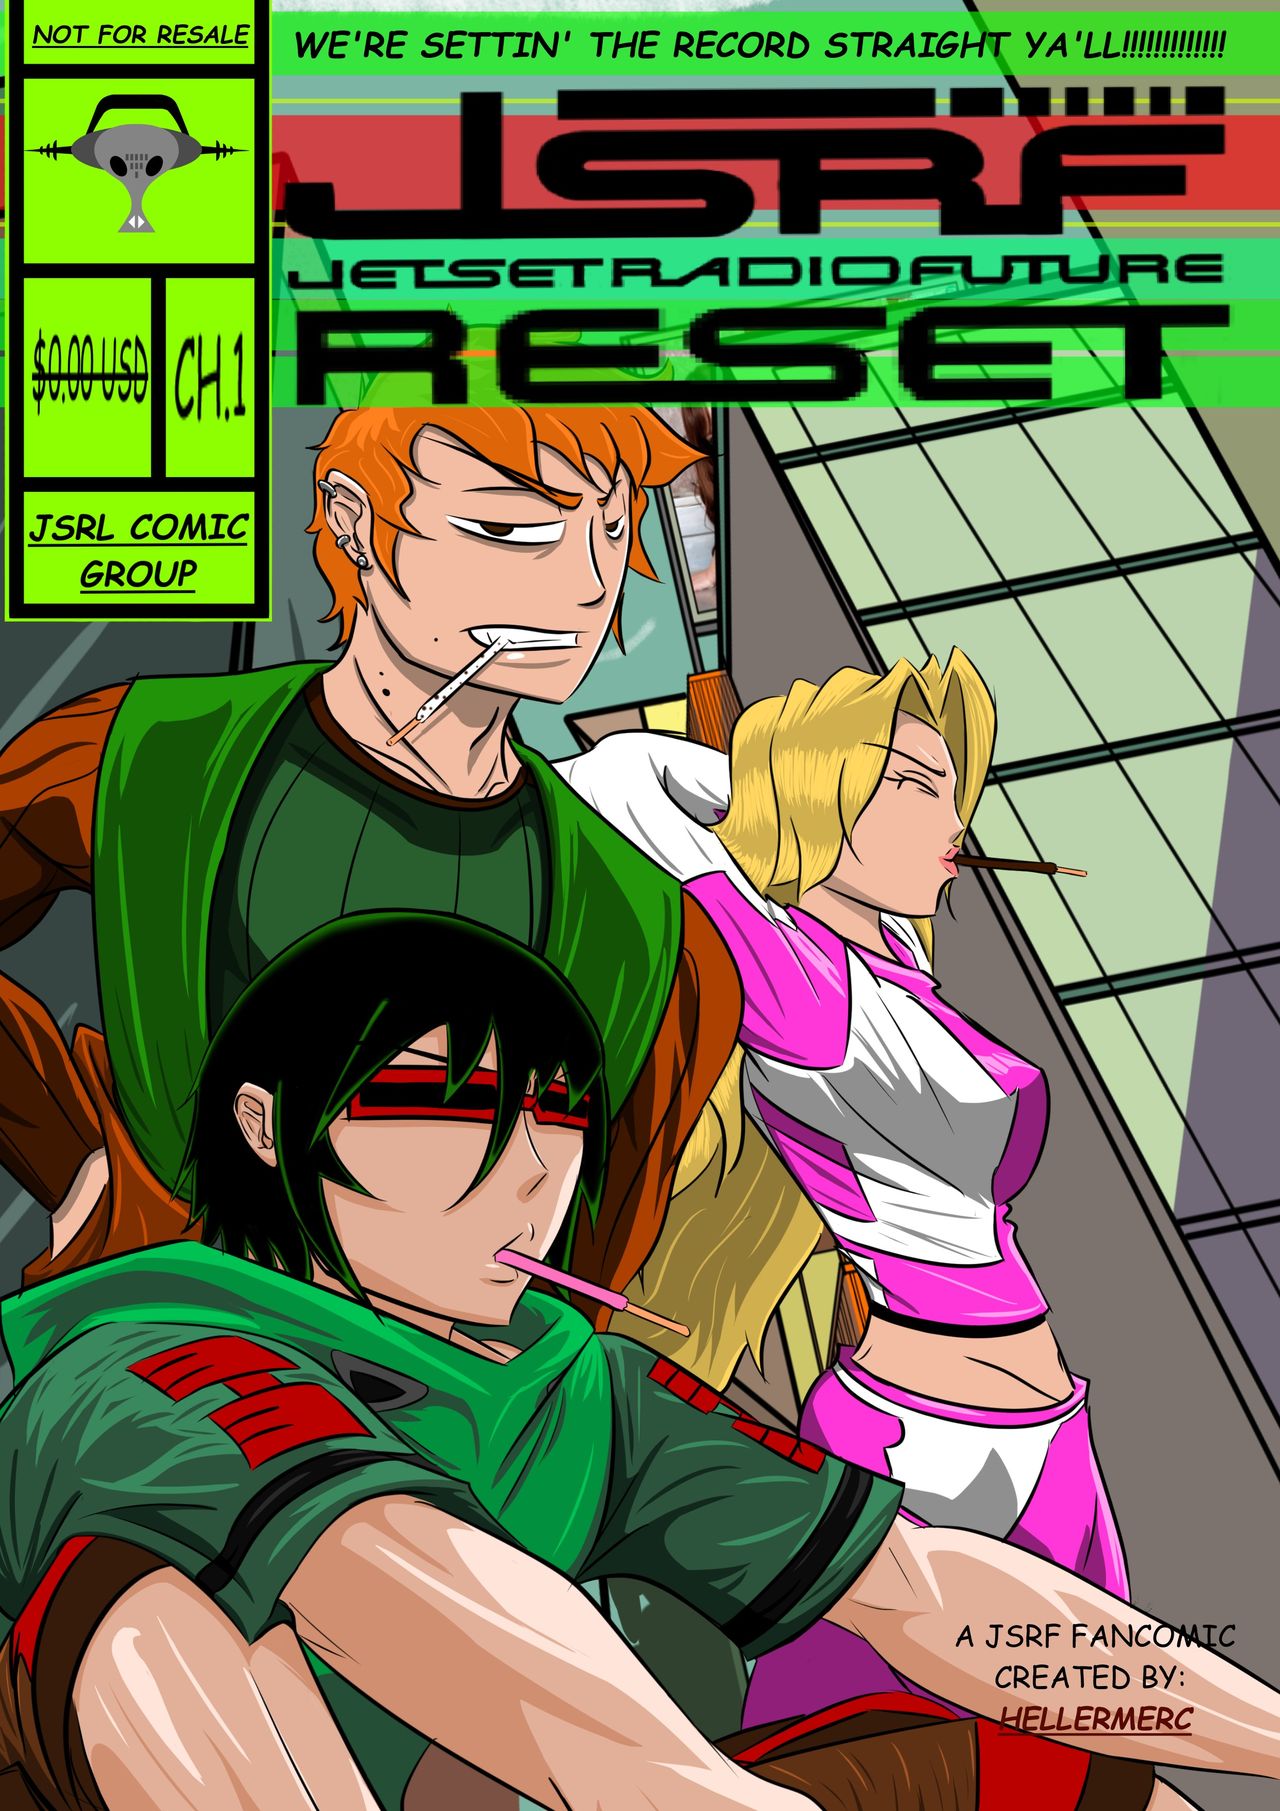 Jsrl comics - Jet Set Radio Future Reset